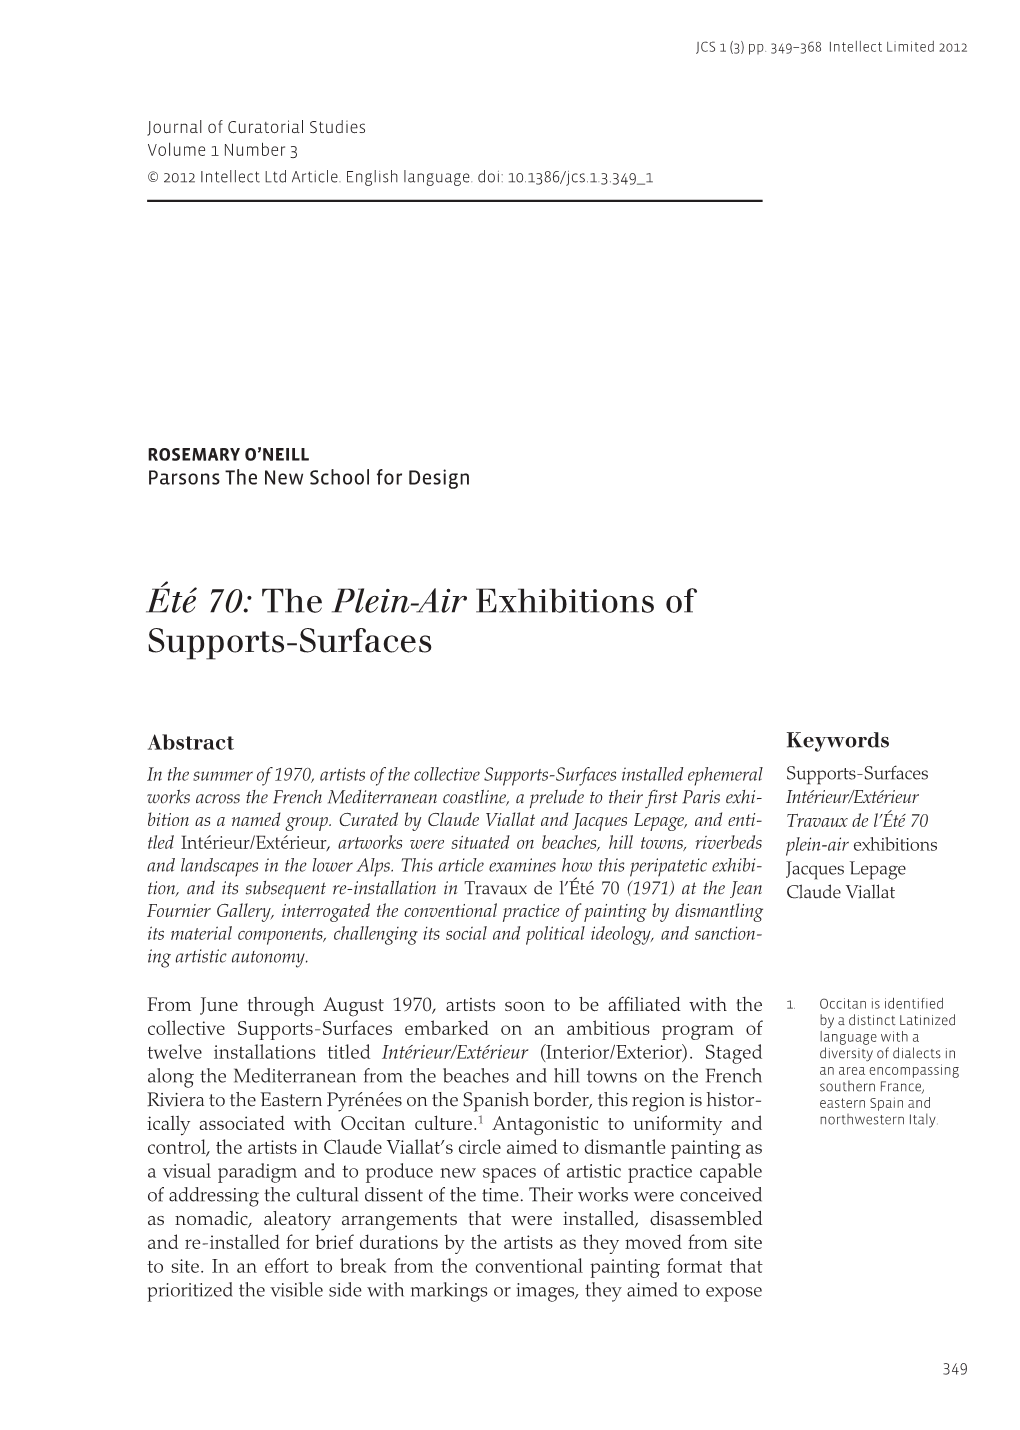 Été 70: the Plein-Air Exhibitions of Supports-Surfaces